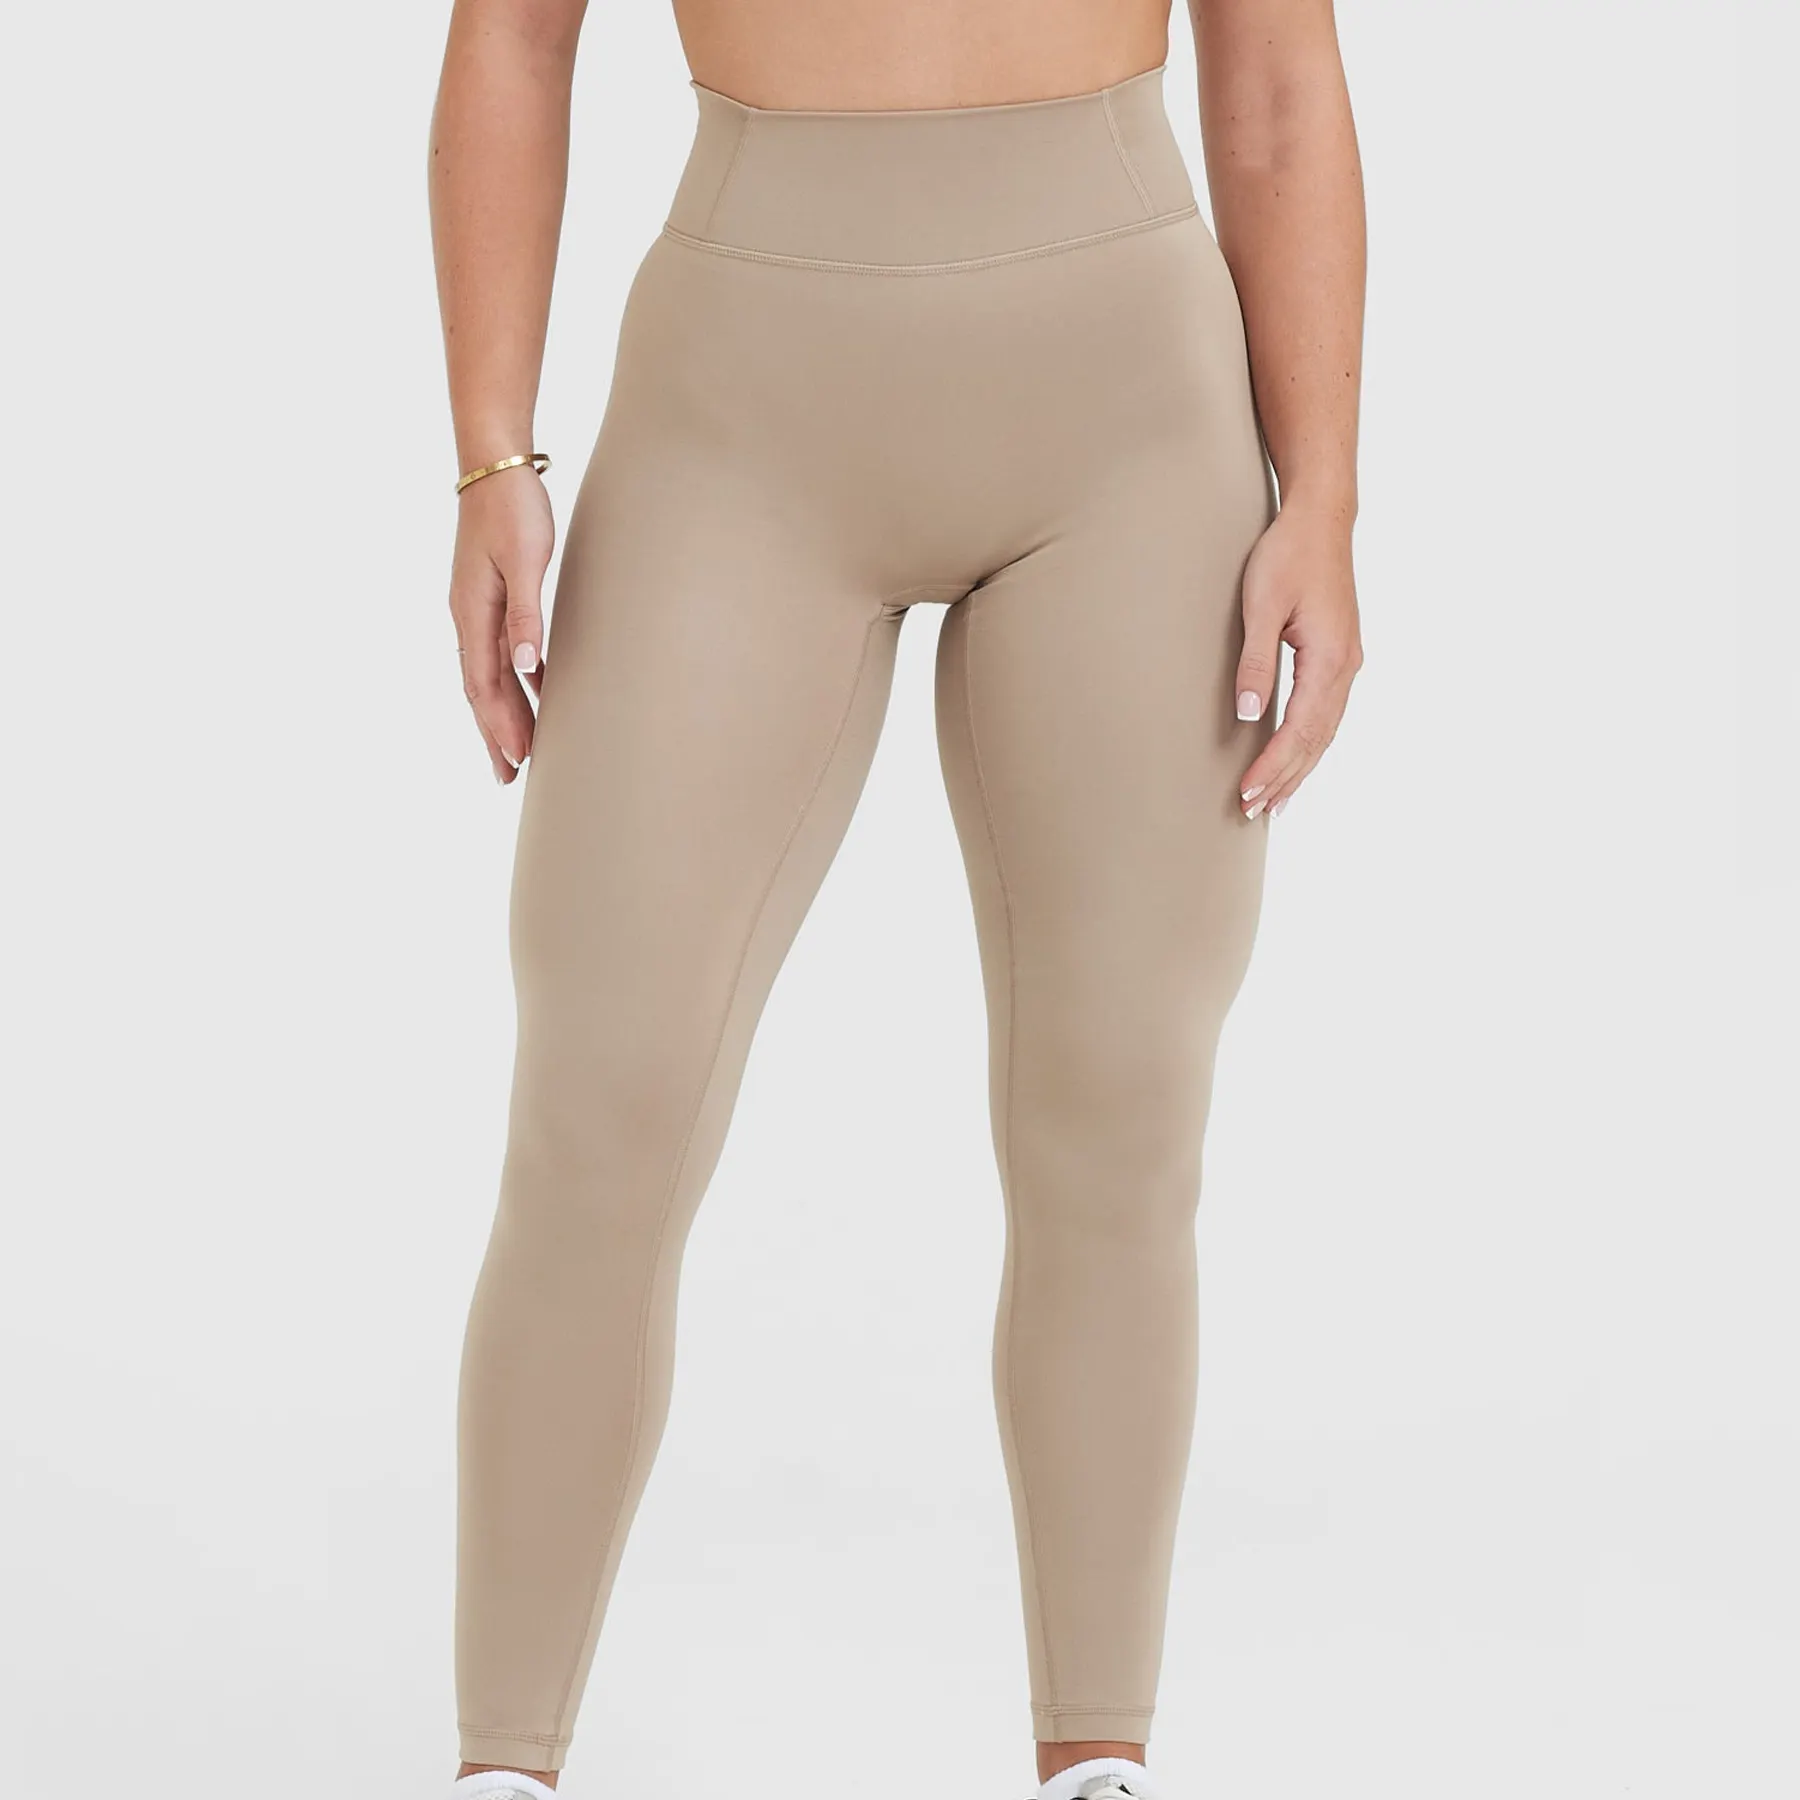 New Style Fashion Design Side Cutout Yoga Pants Seamless Knitted Legs High Waist Women's Workout Leggings